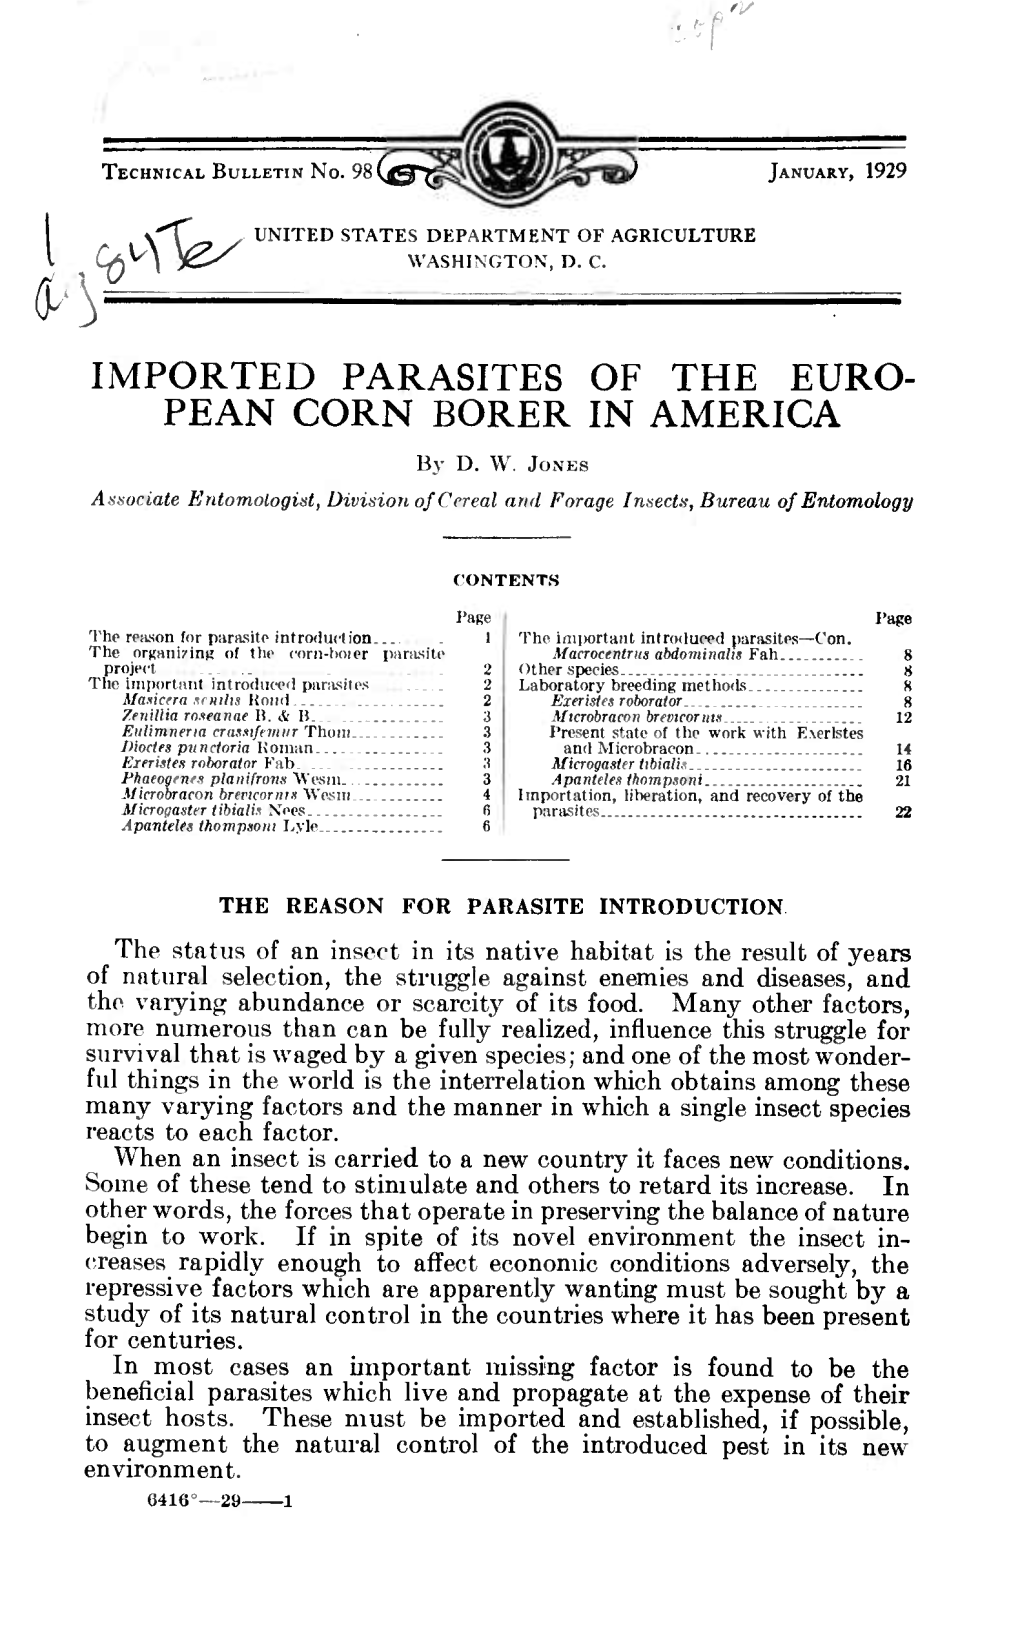 Imported Parasites of the Euro- Pean Corn Borer in America